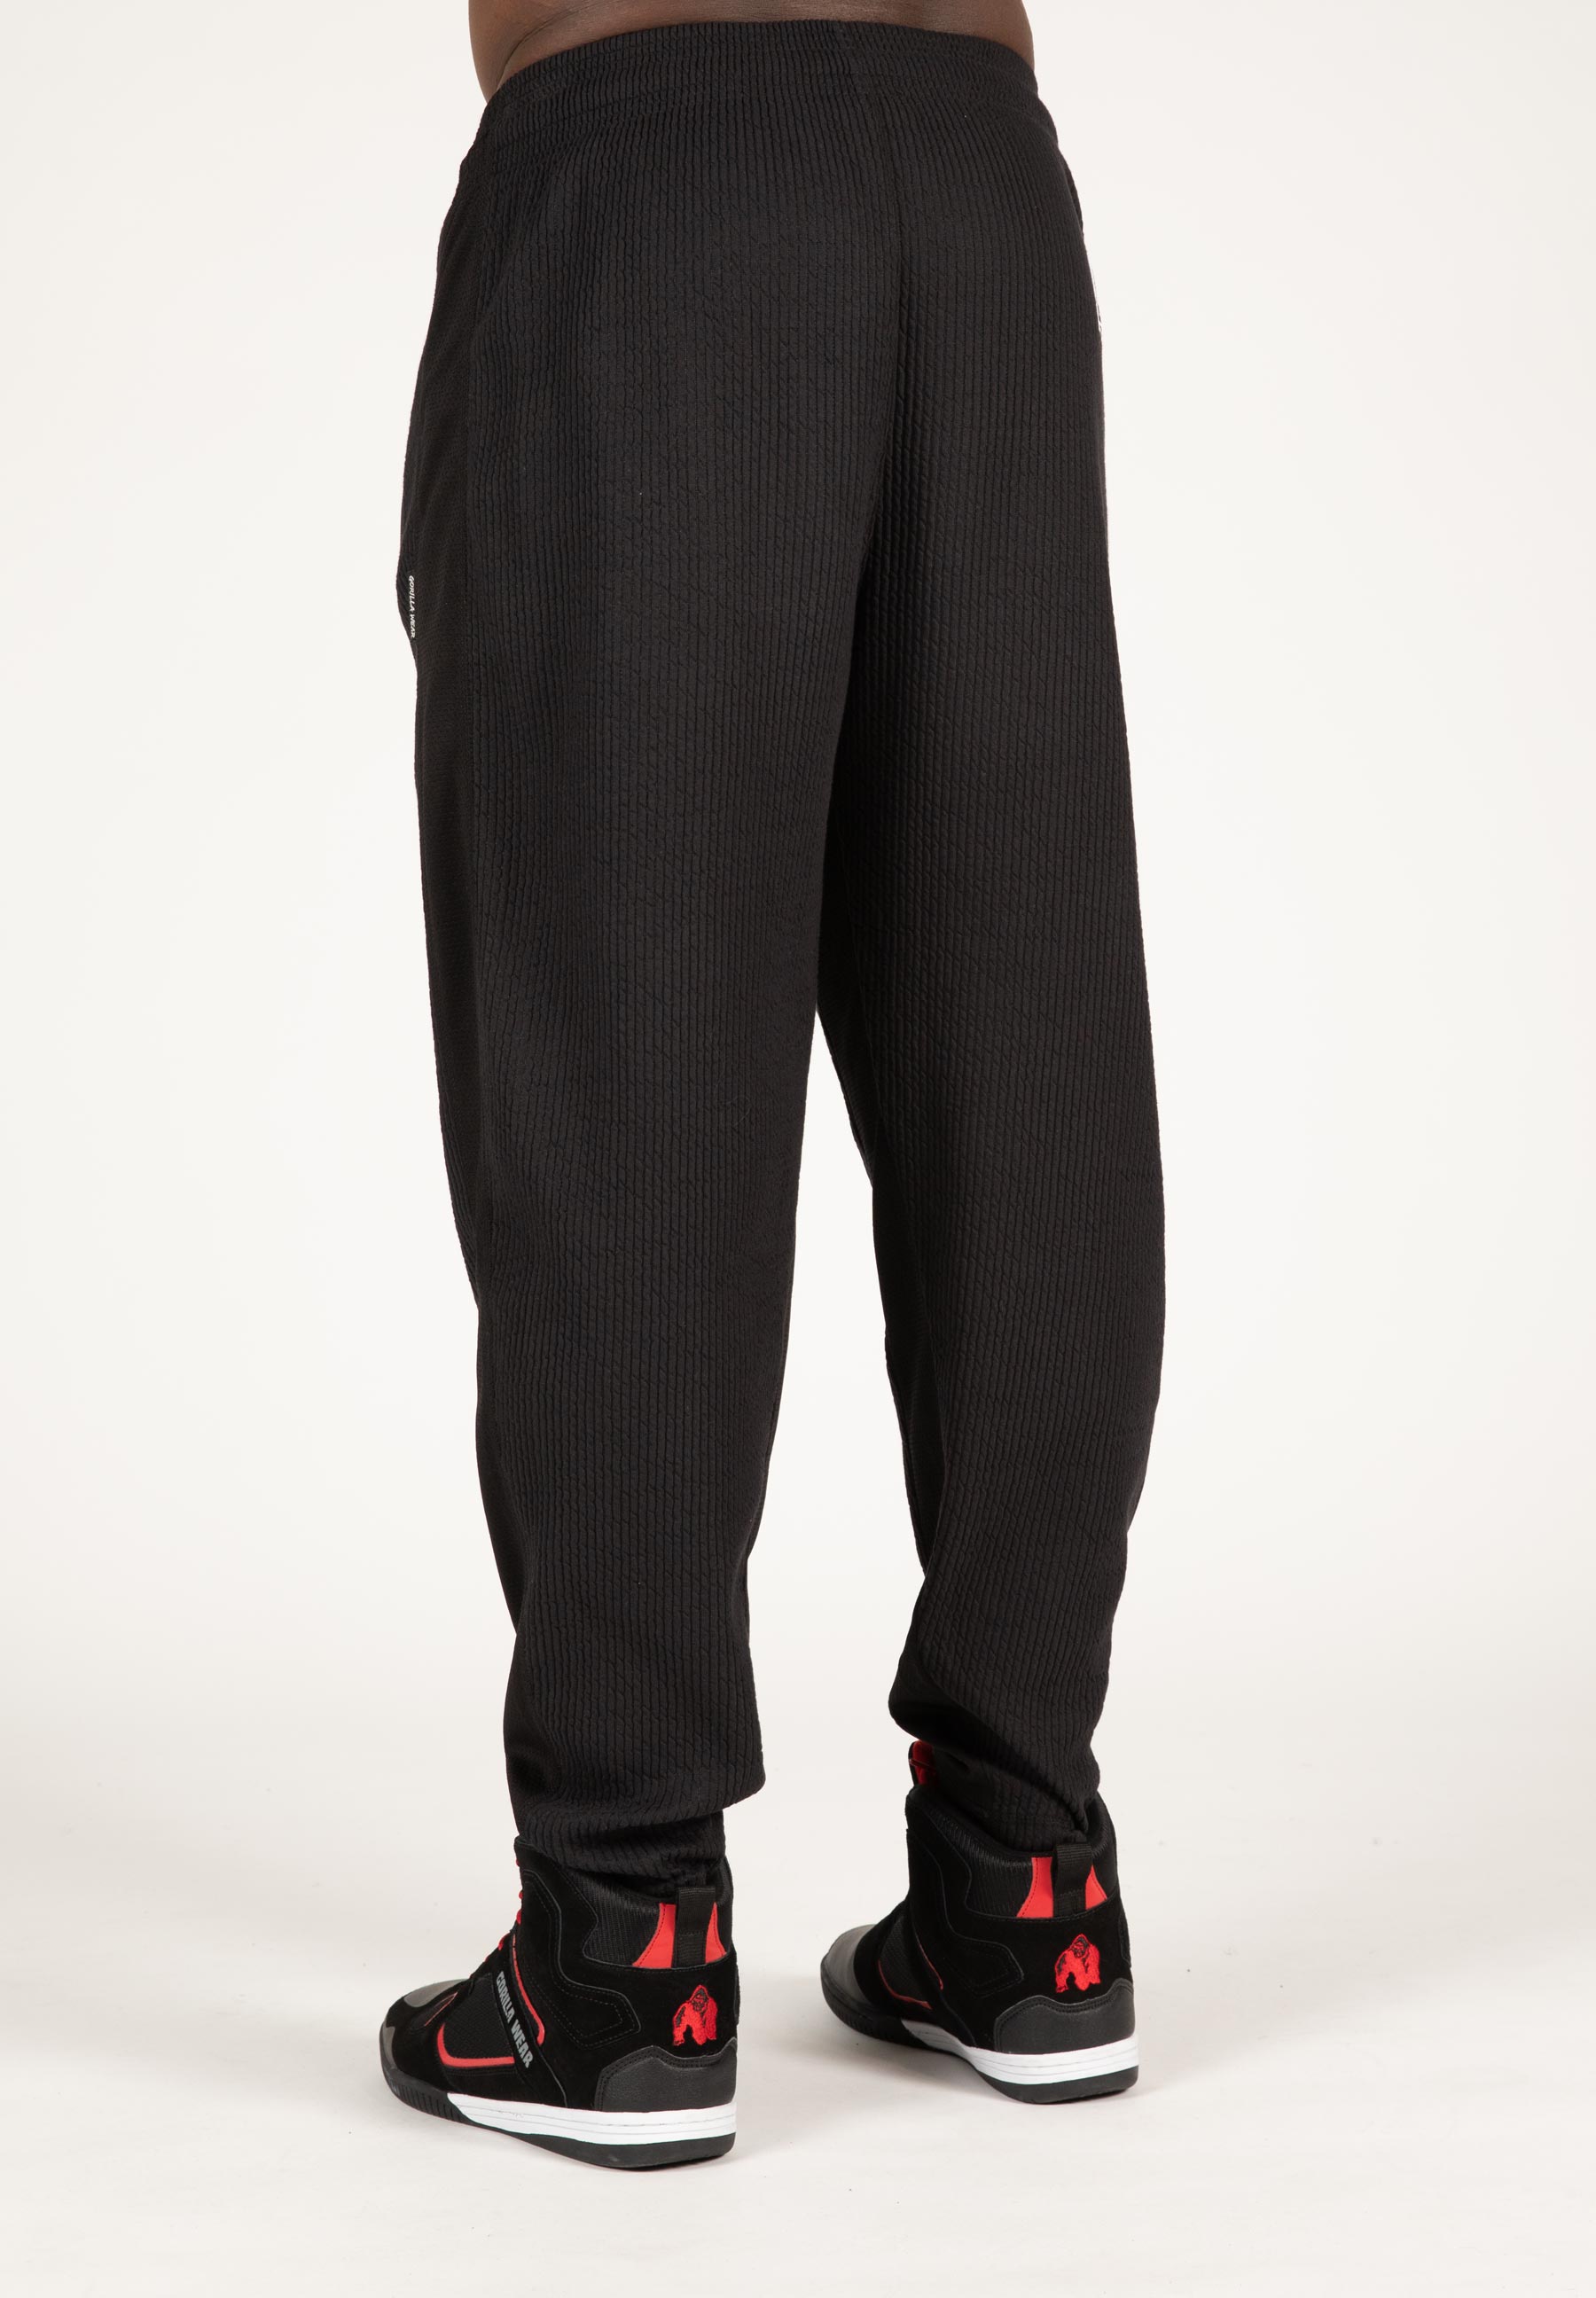 Augustine Old School Pants - Black/Red - 4XL/5XL Gorilla Wear